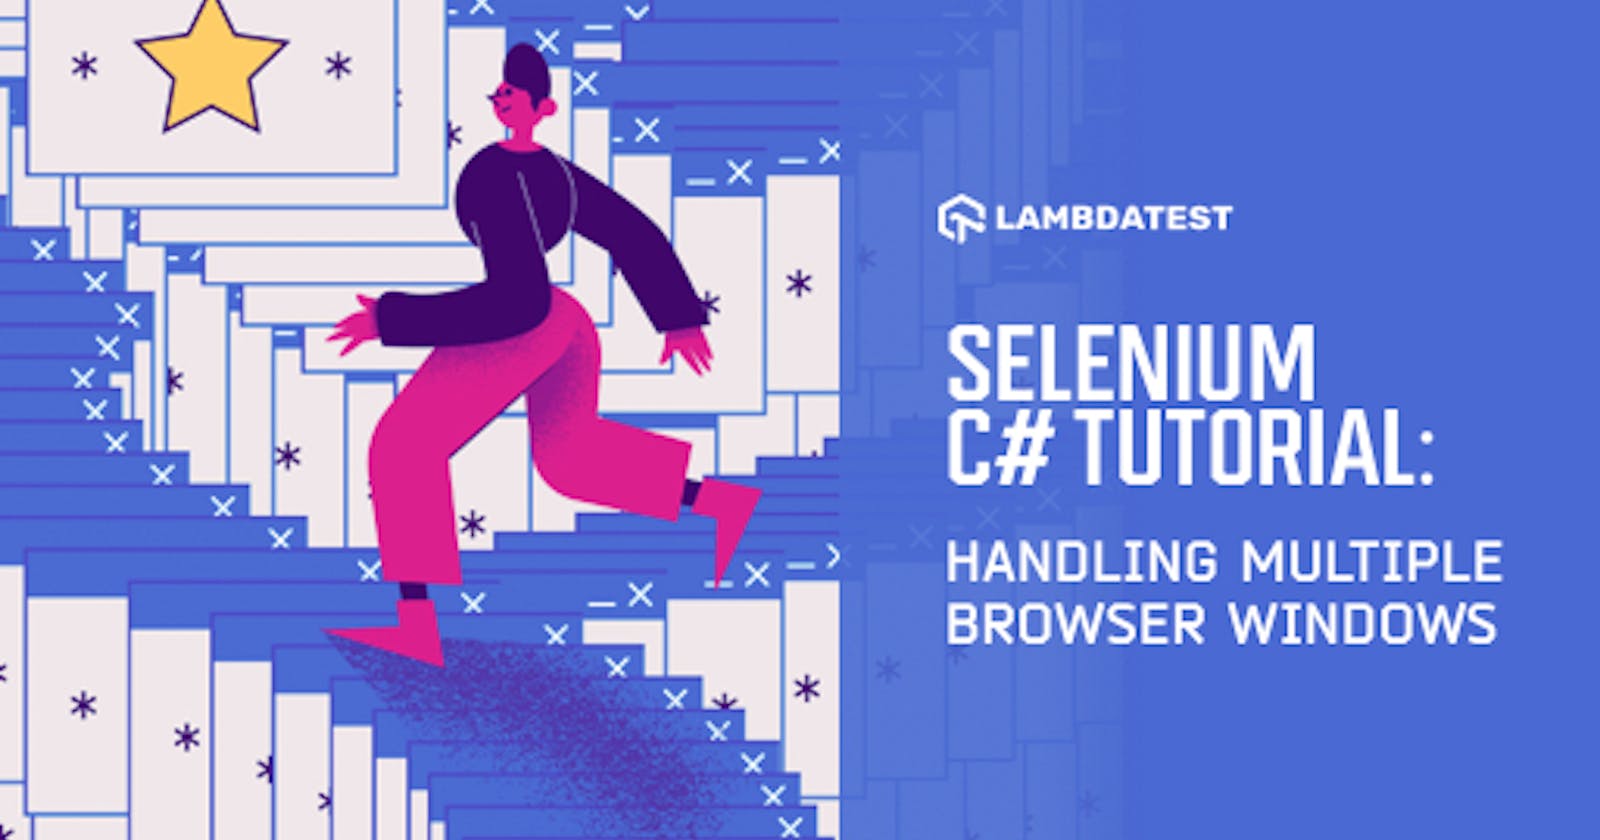 Selenium C# Tutorial: Handling Multiple Browser Windows